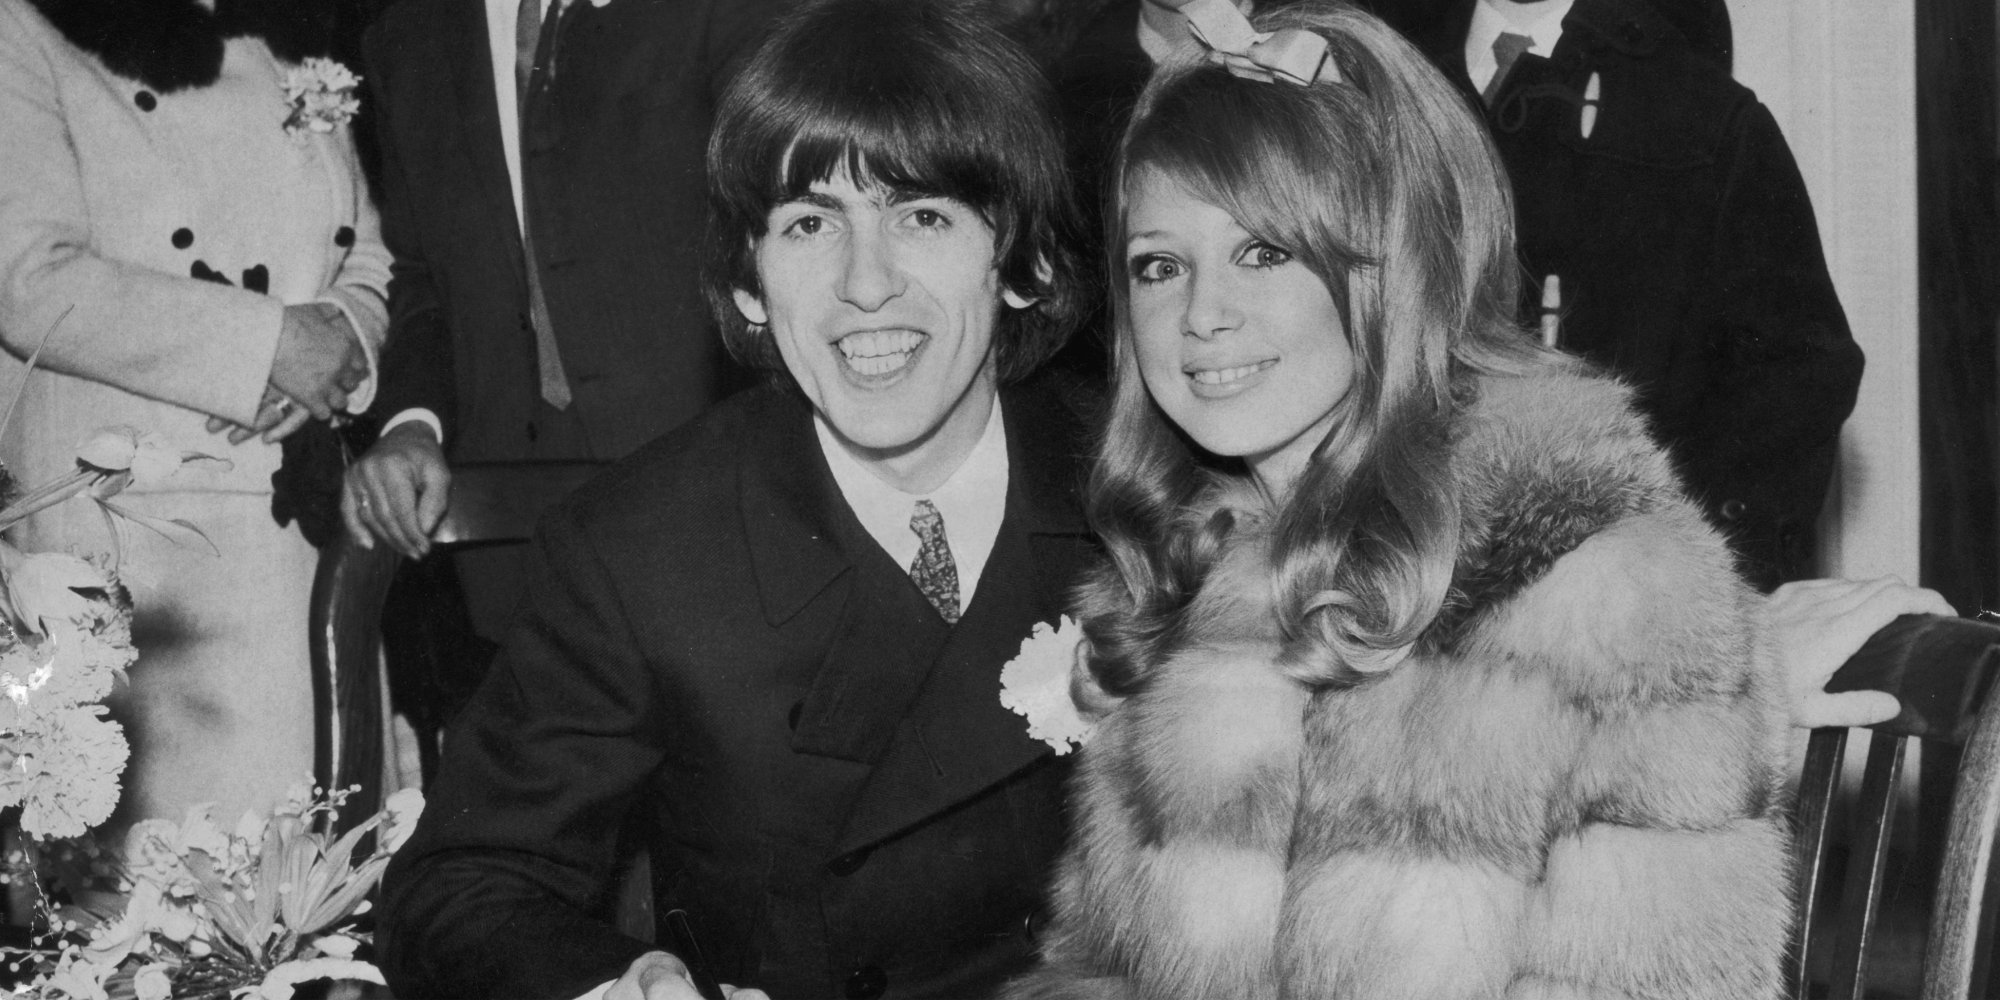 George Harrison and Pattie Boyd sign the registrar book after their Jan. 1966 wedding ceremony.